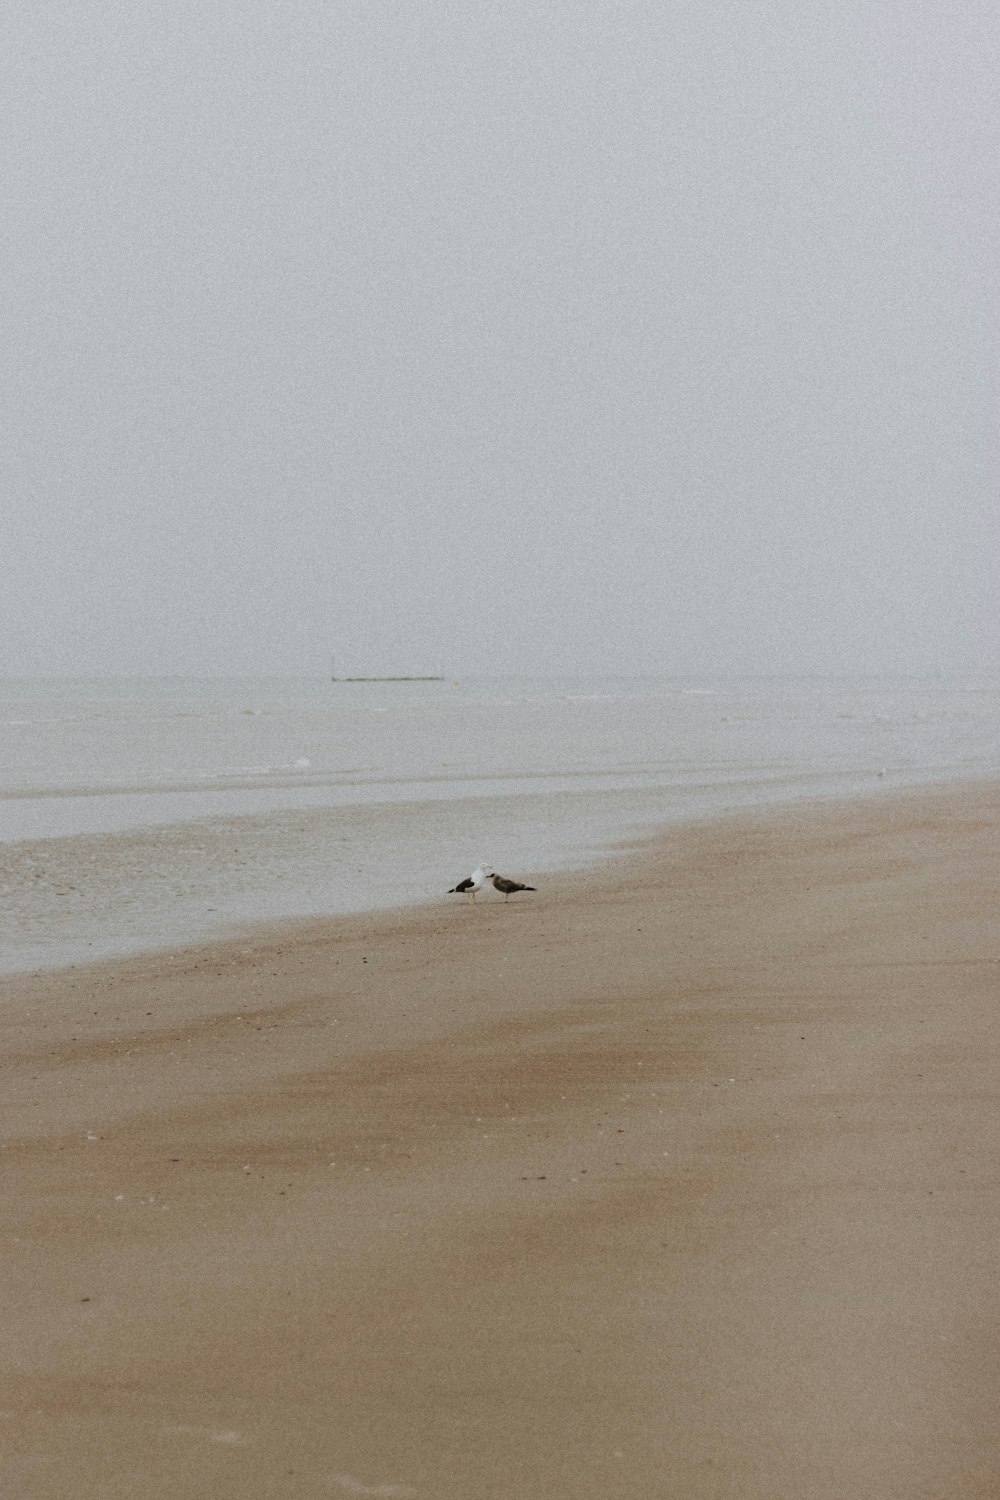 white bird on brown sand near body of water during daytime